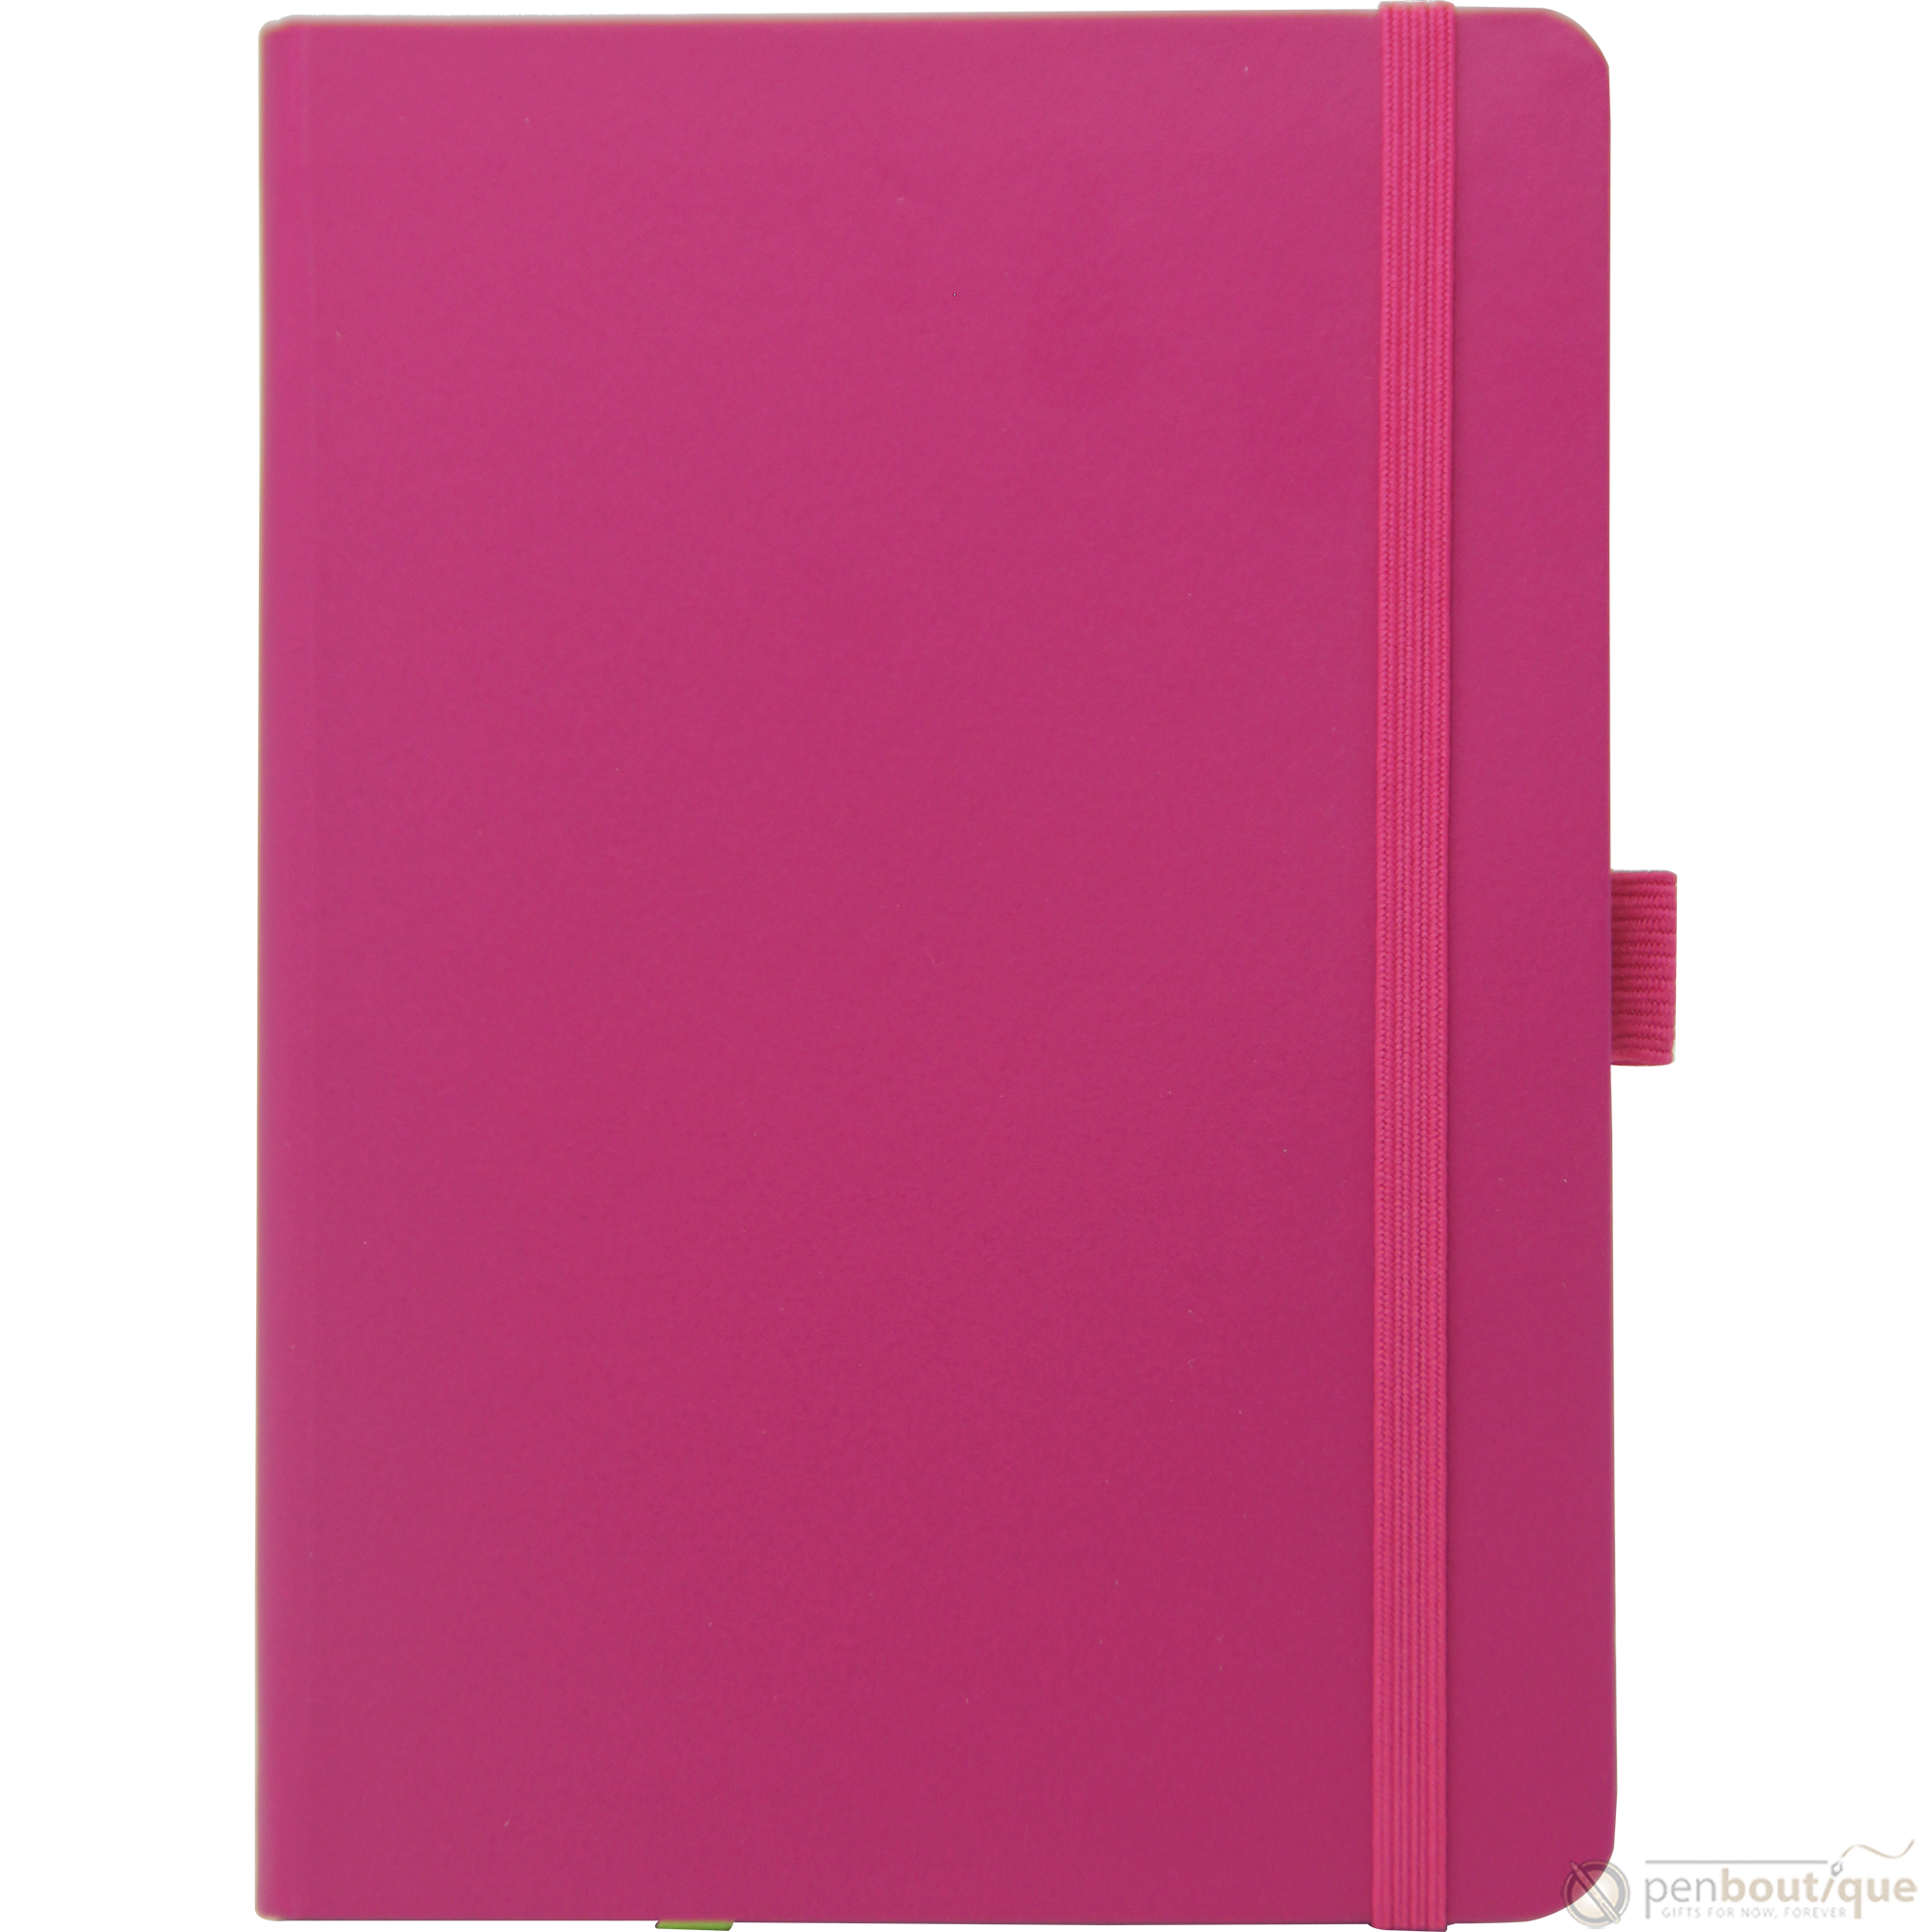 Lamy Notebook - Soft Pink - A6-Pen Boutique Ltd